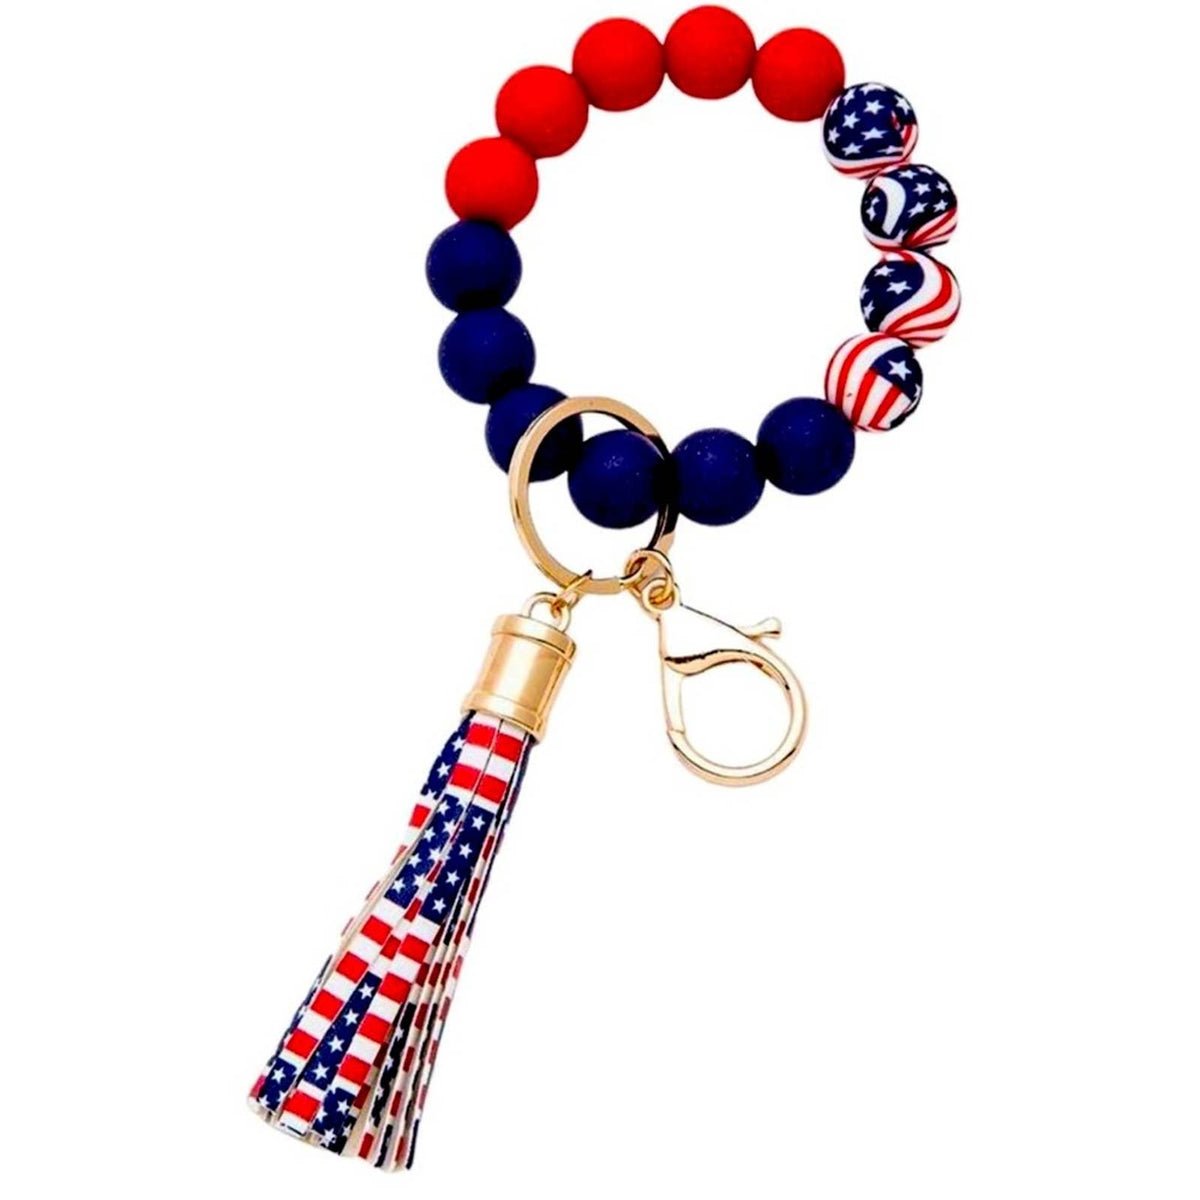 New Silicone Beaded
Americana Tassel Bracelet
Keychain/bag charm